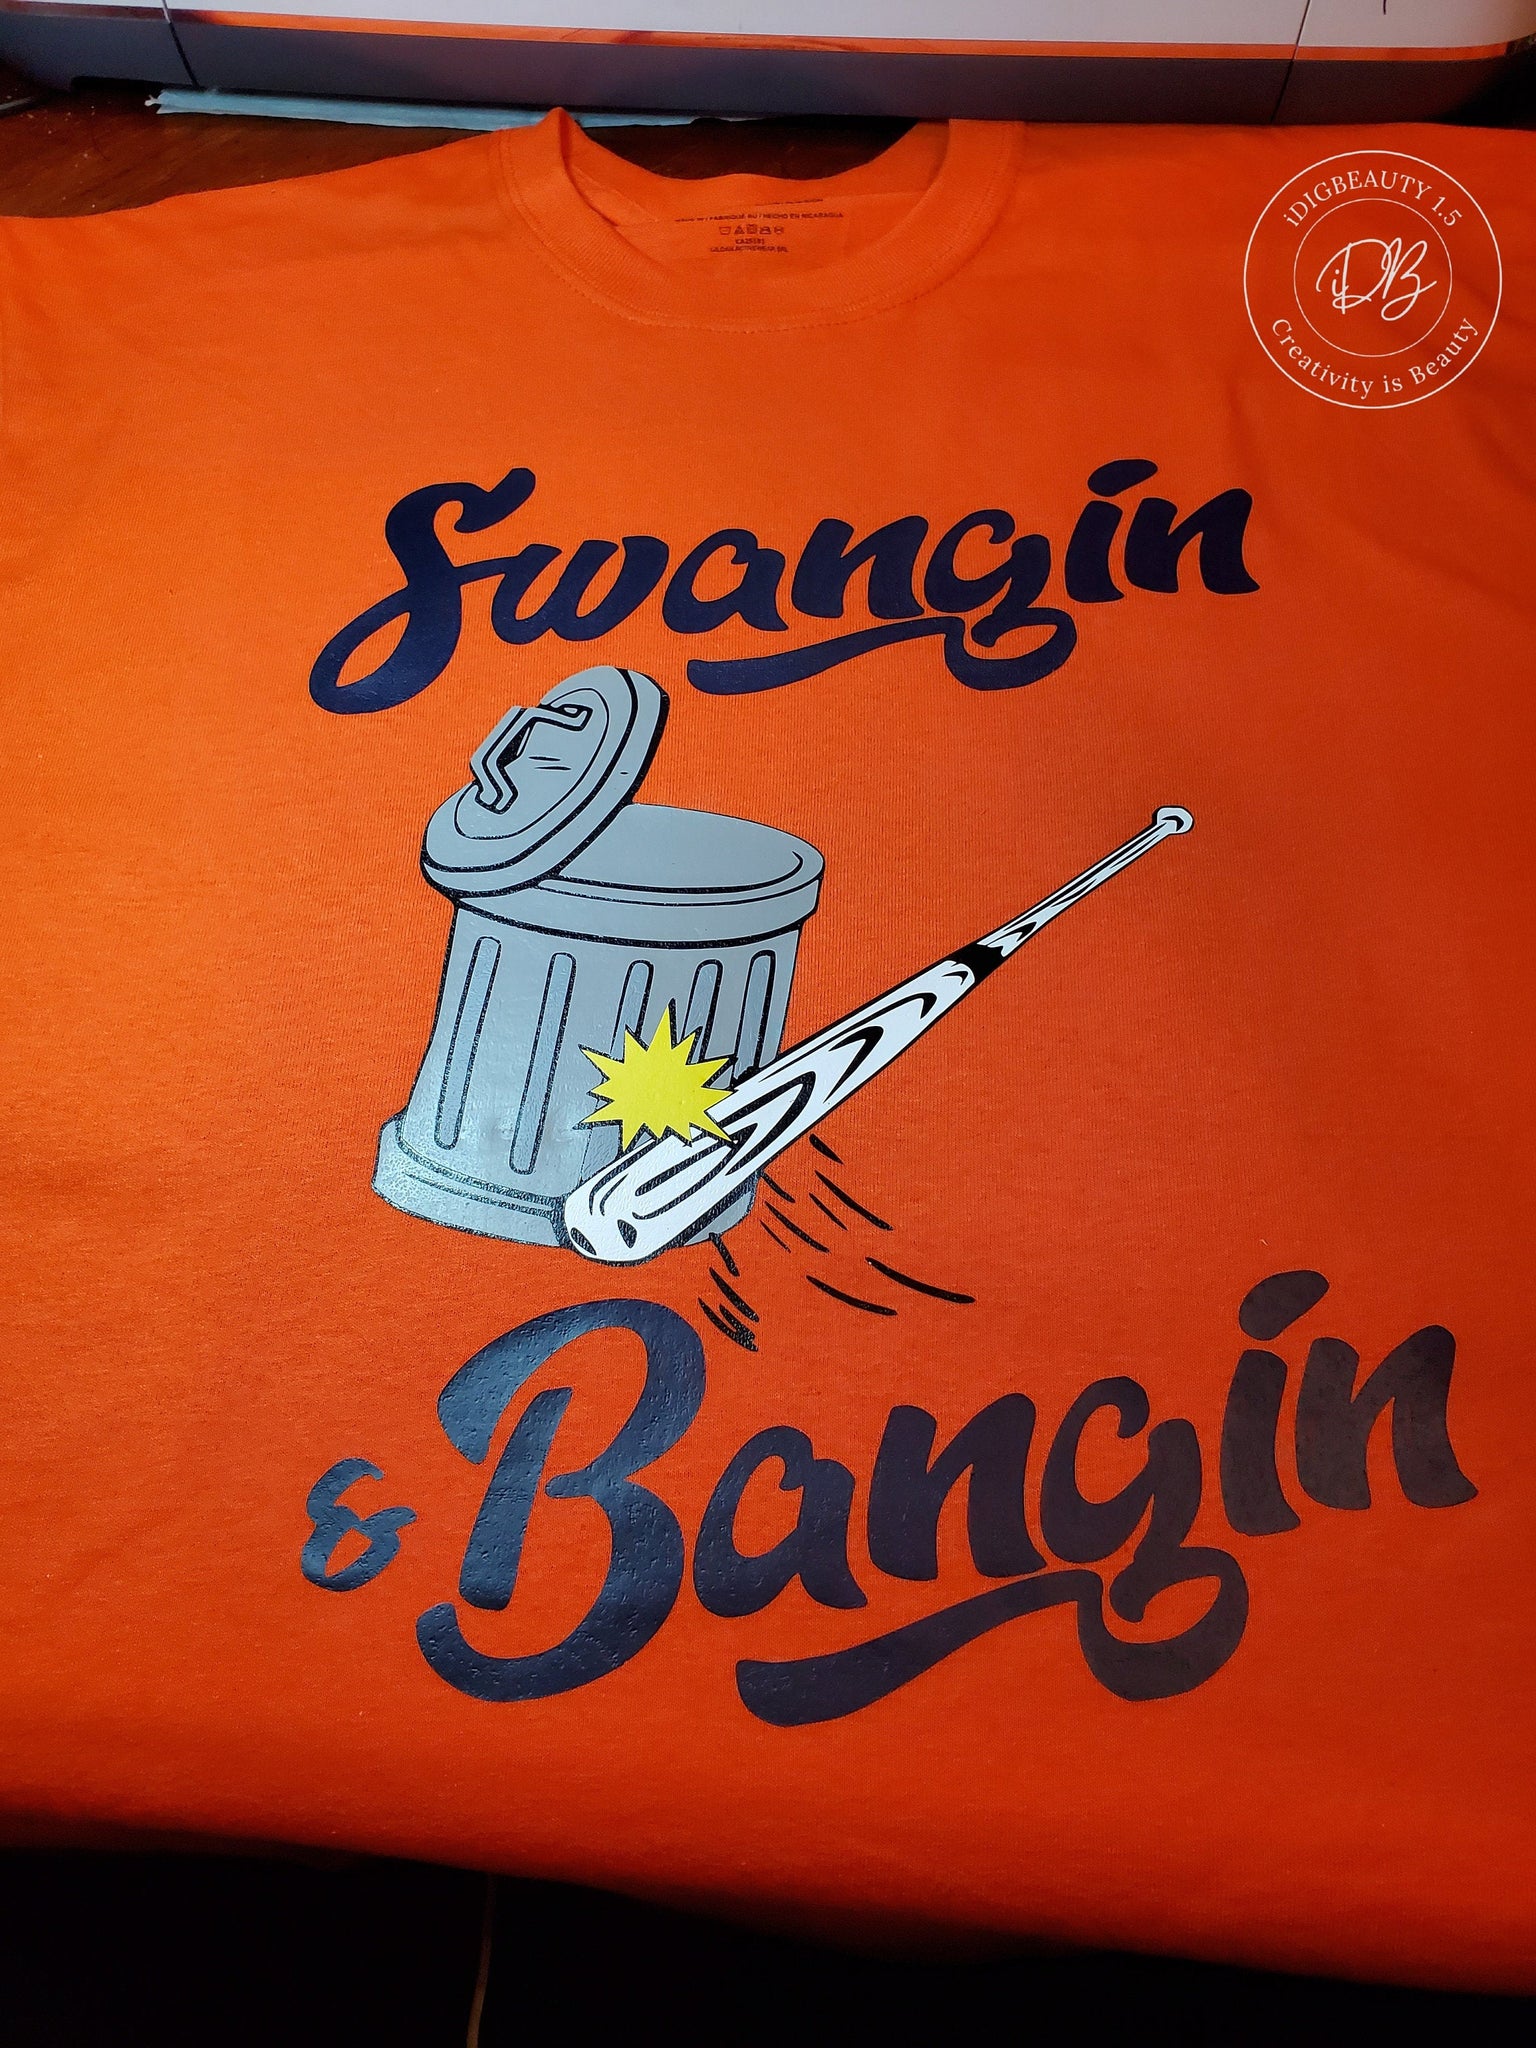 Swangin and Bangin Baseball shirt - Kingteeshop